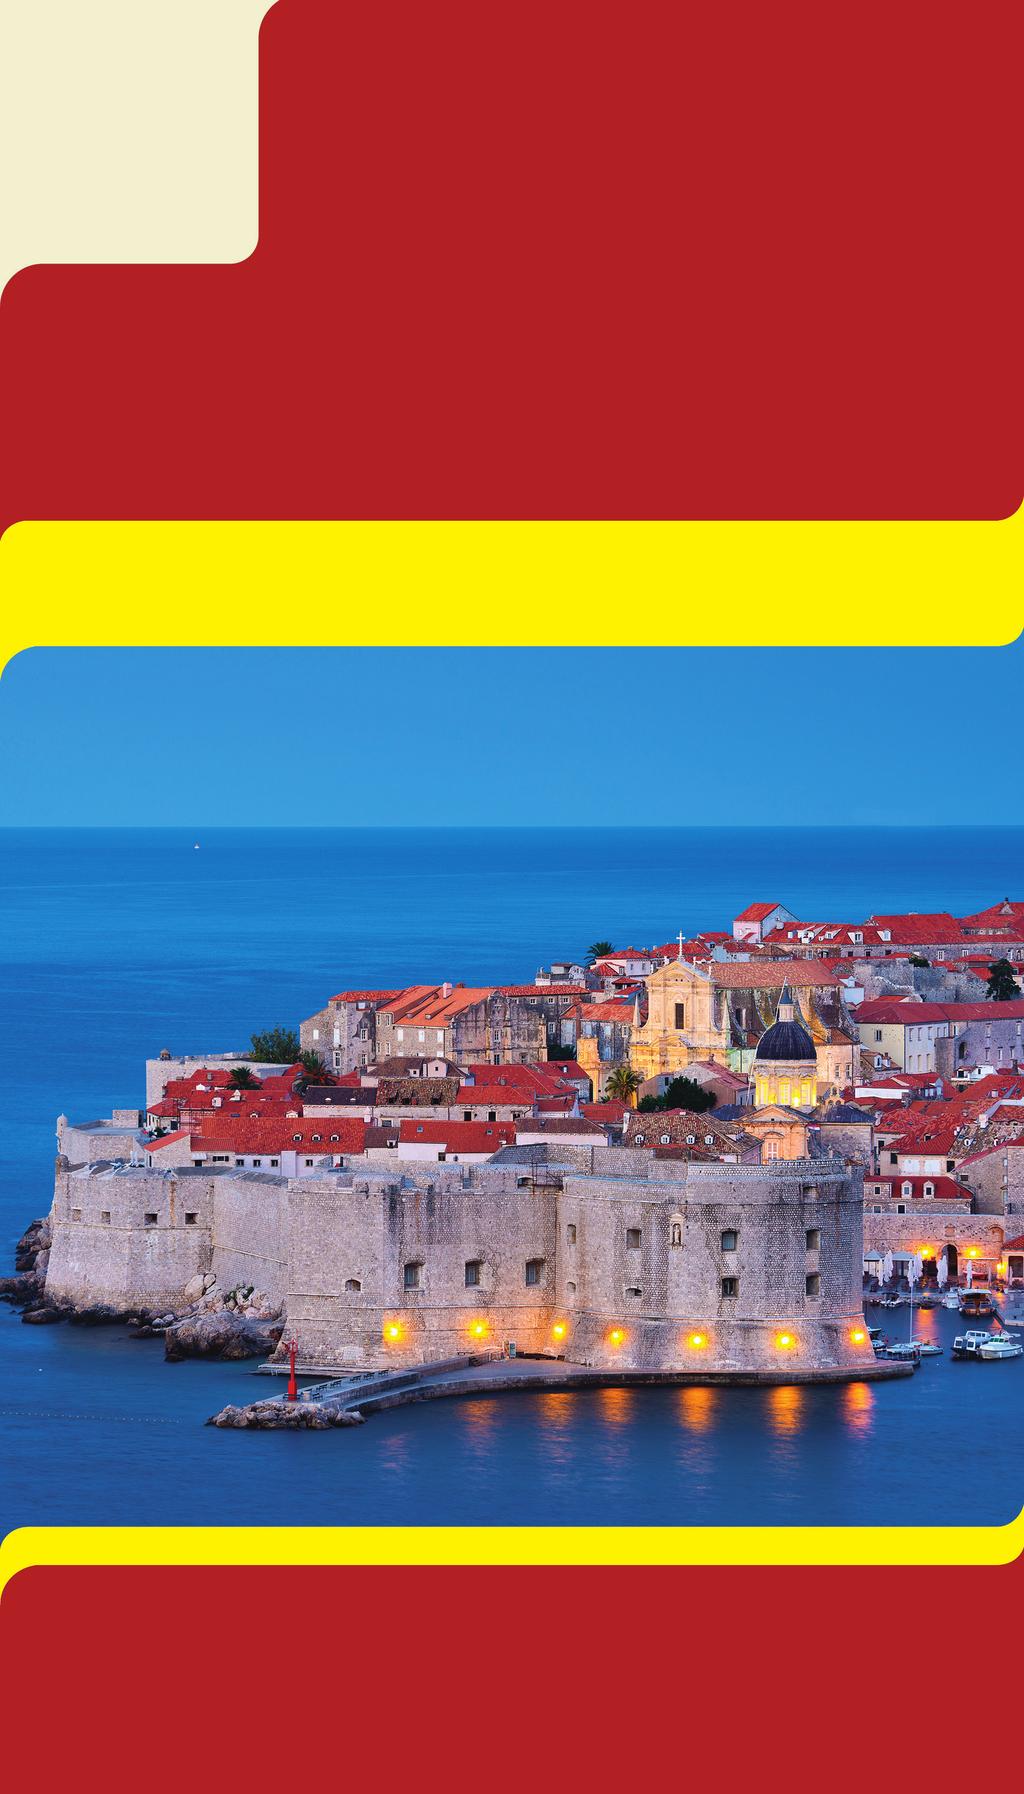 The University of North Carolina General Alumni Association presents PEARLS OF DALMATIA With Dubrovnik & the Island